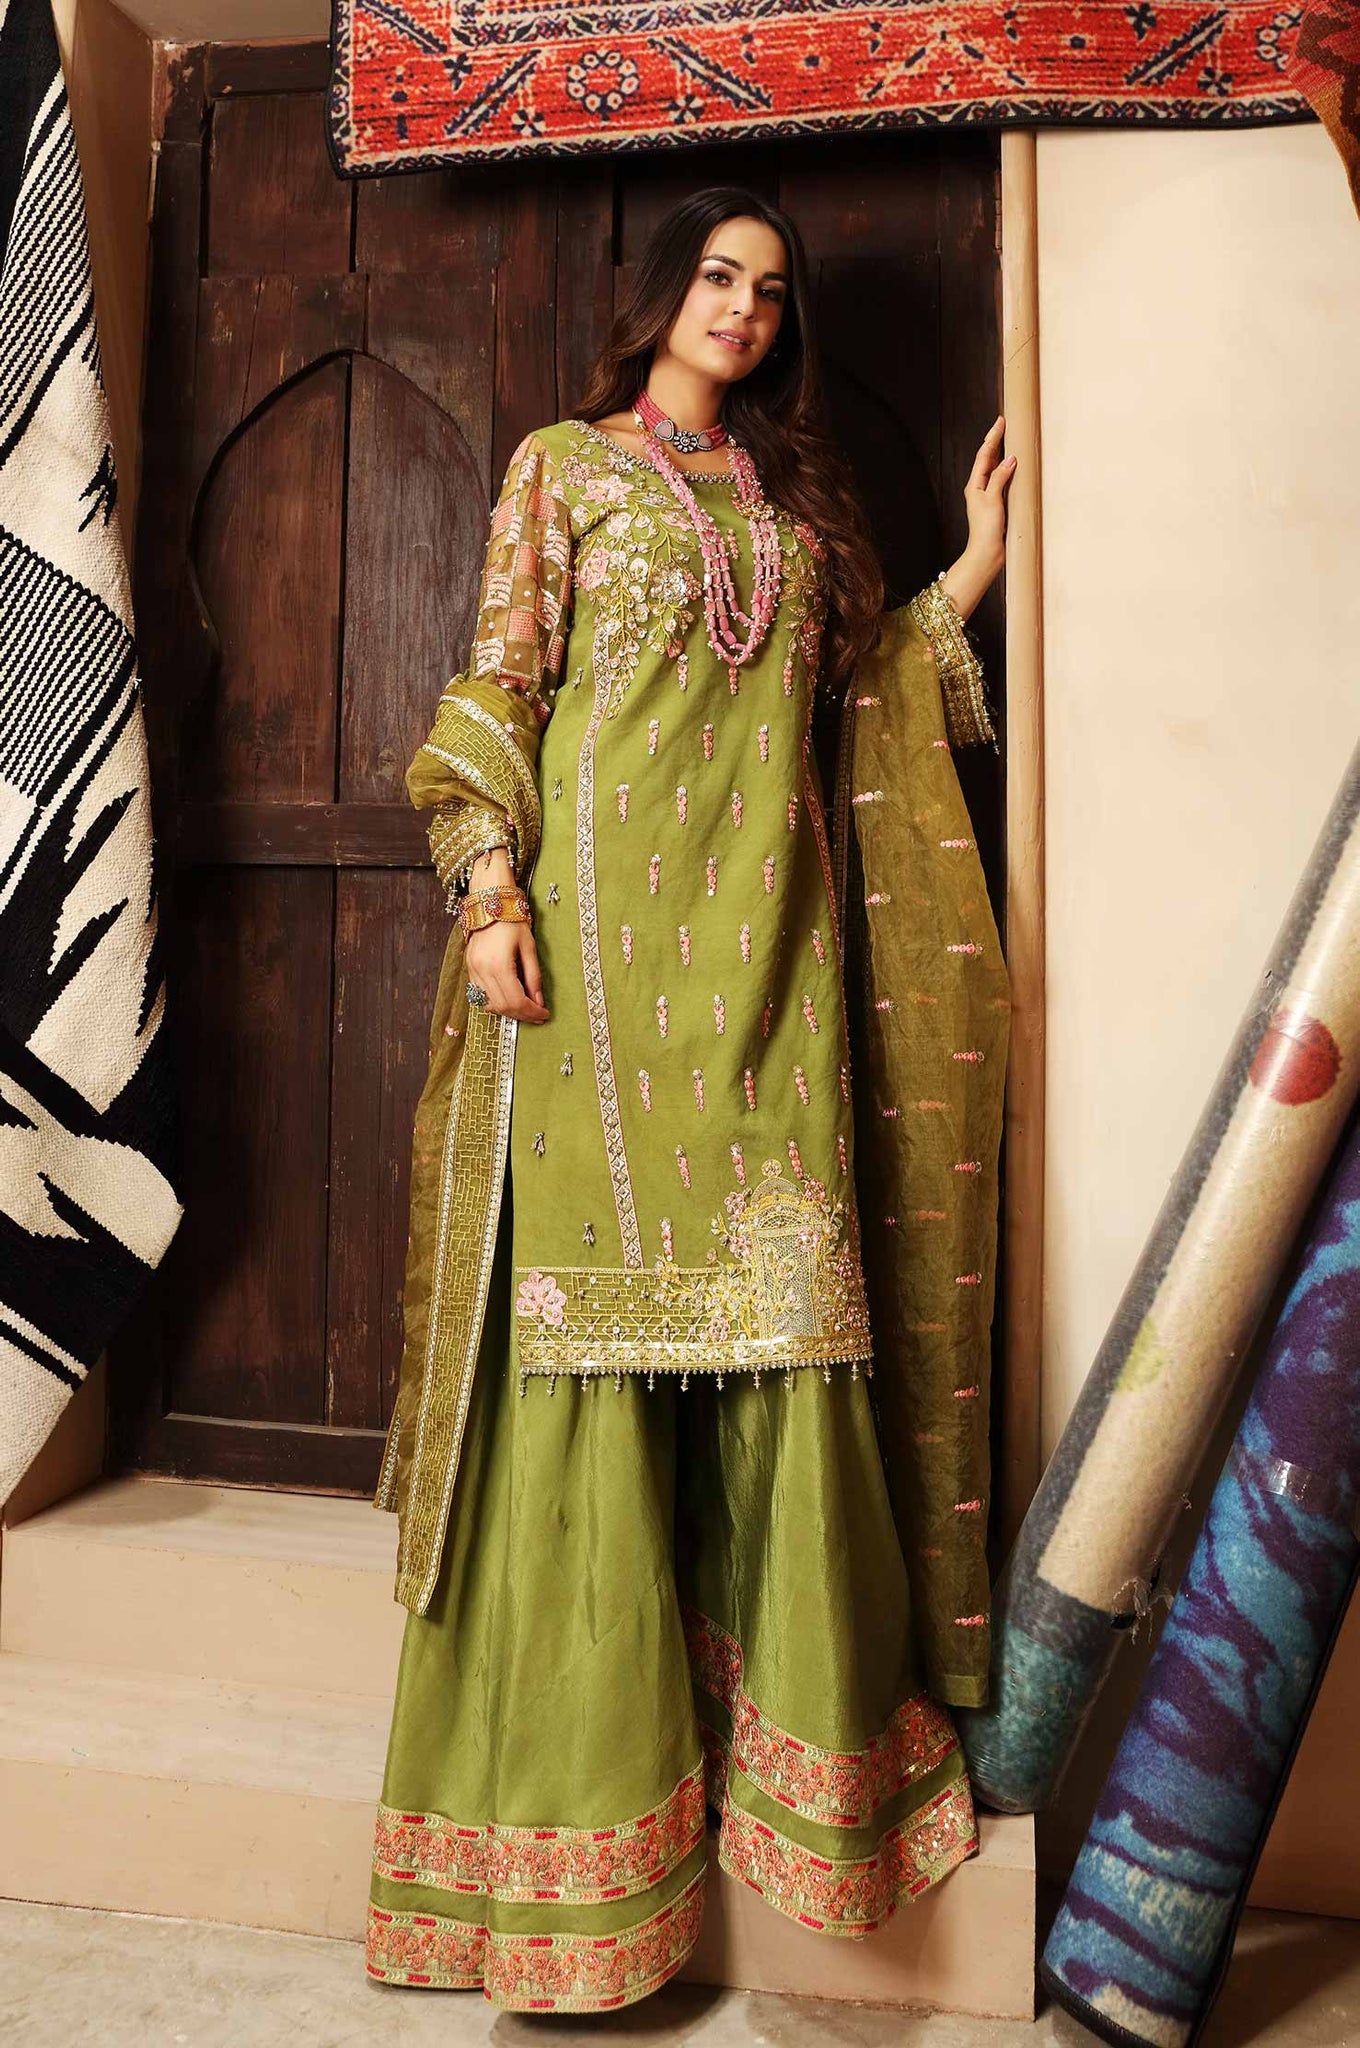 Waqas Shah | Ishq Naama | NEELAM - Khanumjan  Pakistani Clothes and Designer Dresses in UK, USA 